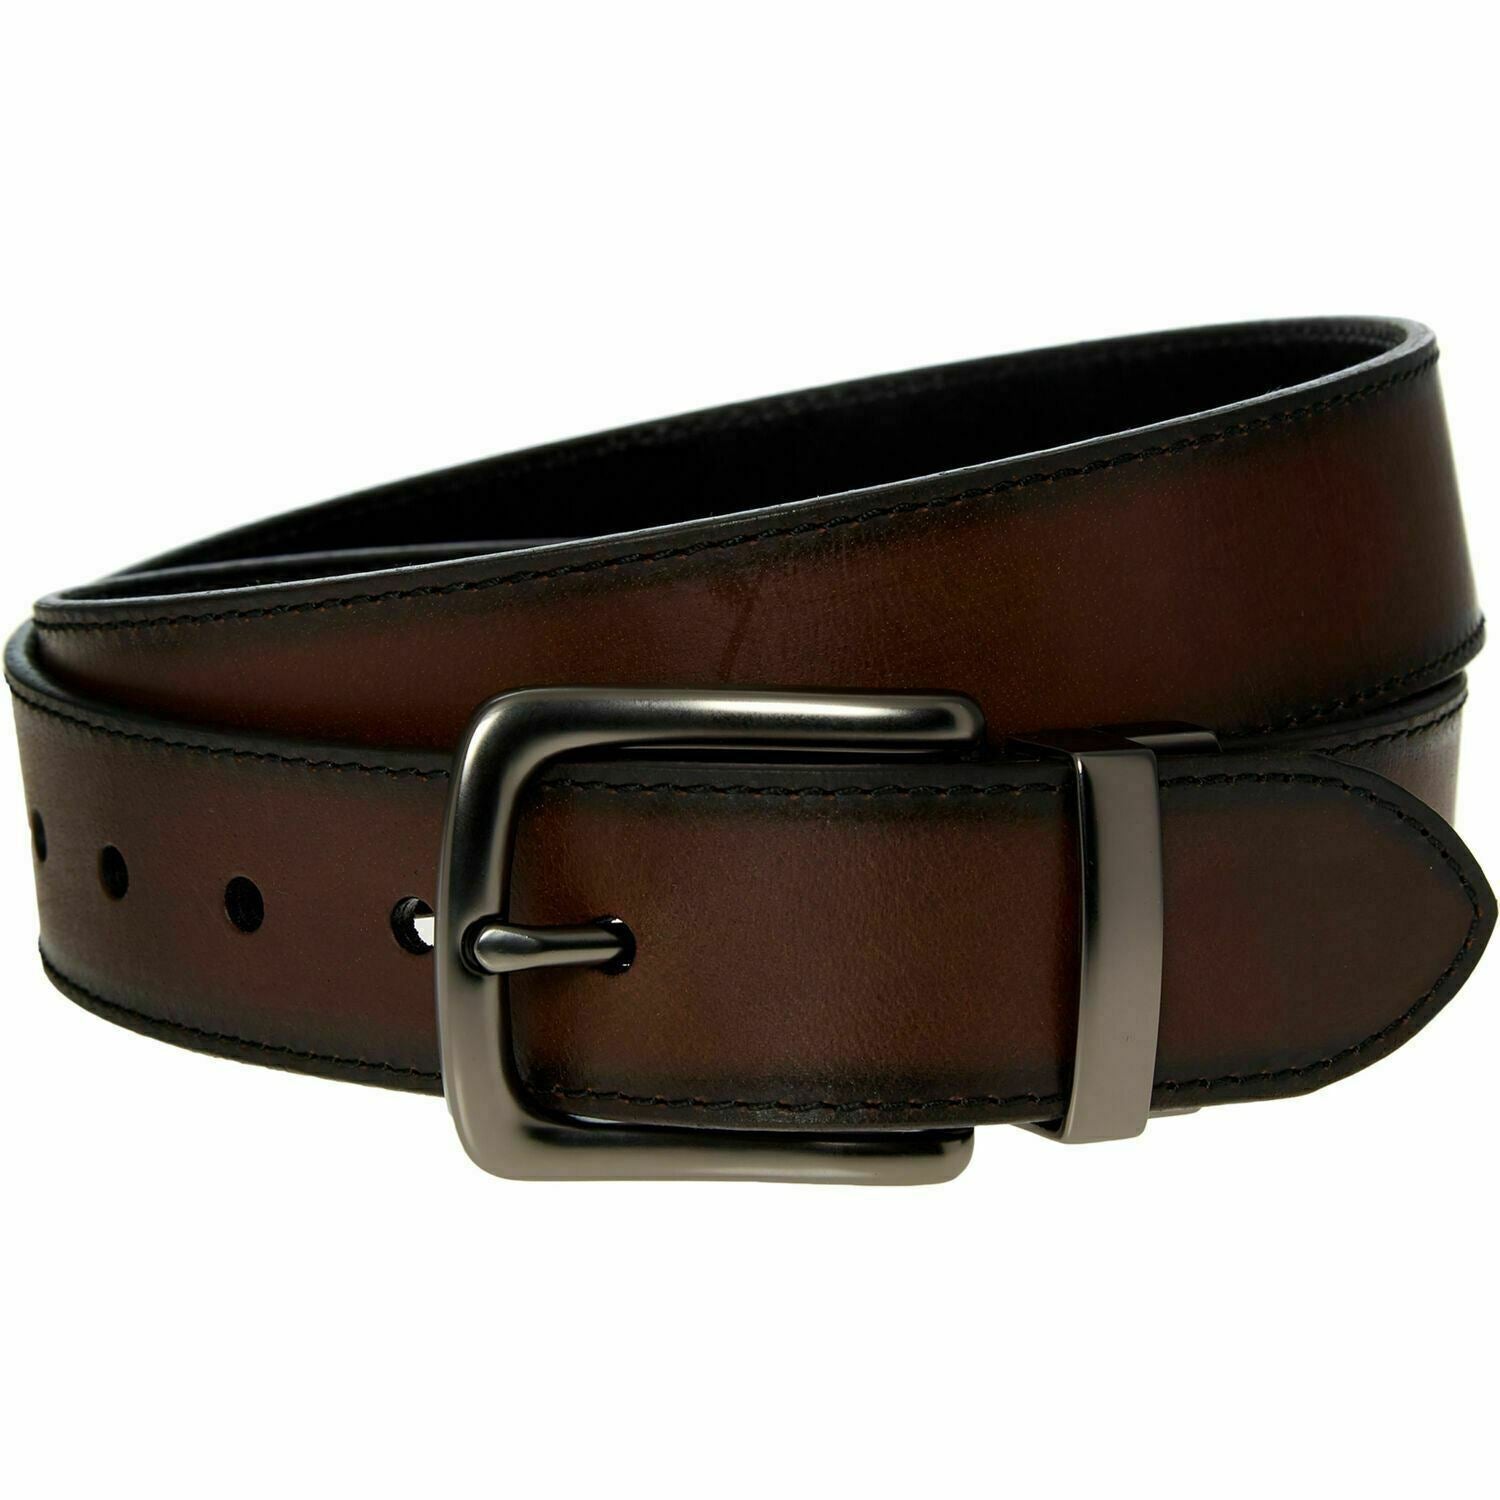 FOSSIL Men's BRAYDEN Genuine Leather Brown Belt, Reversible, size W38